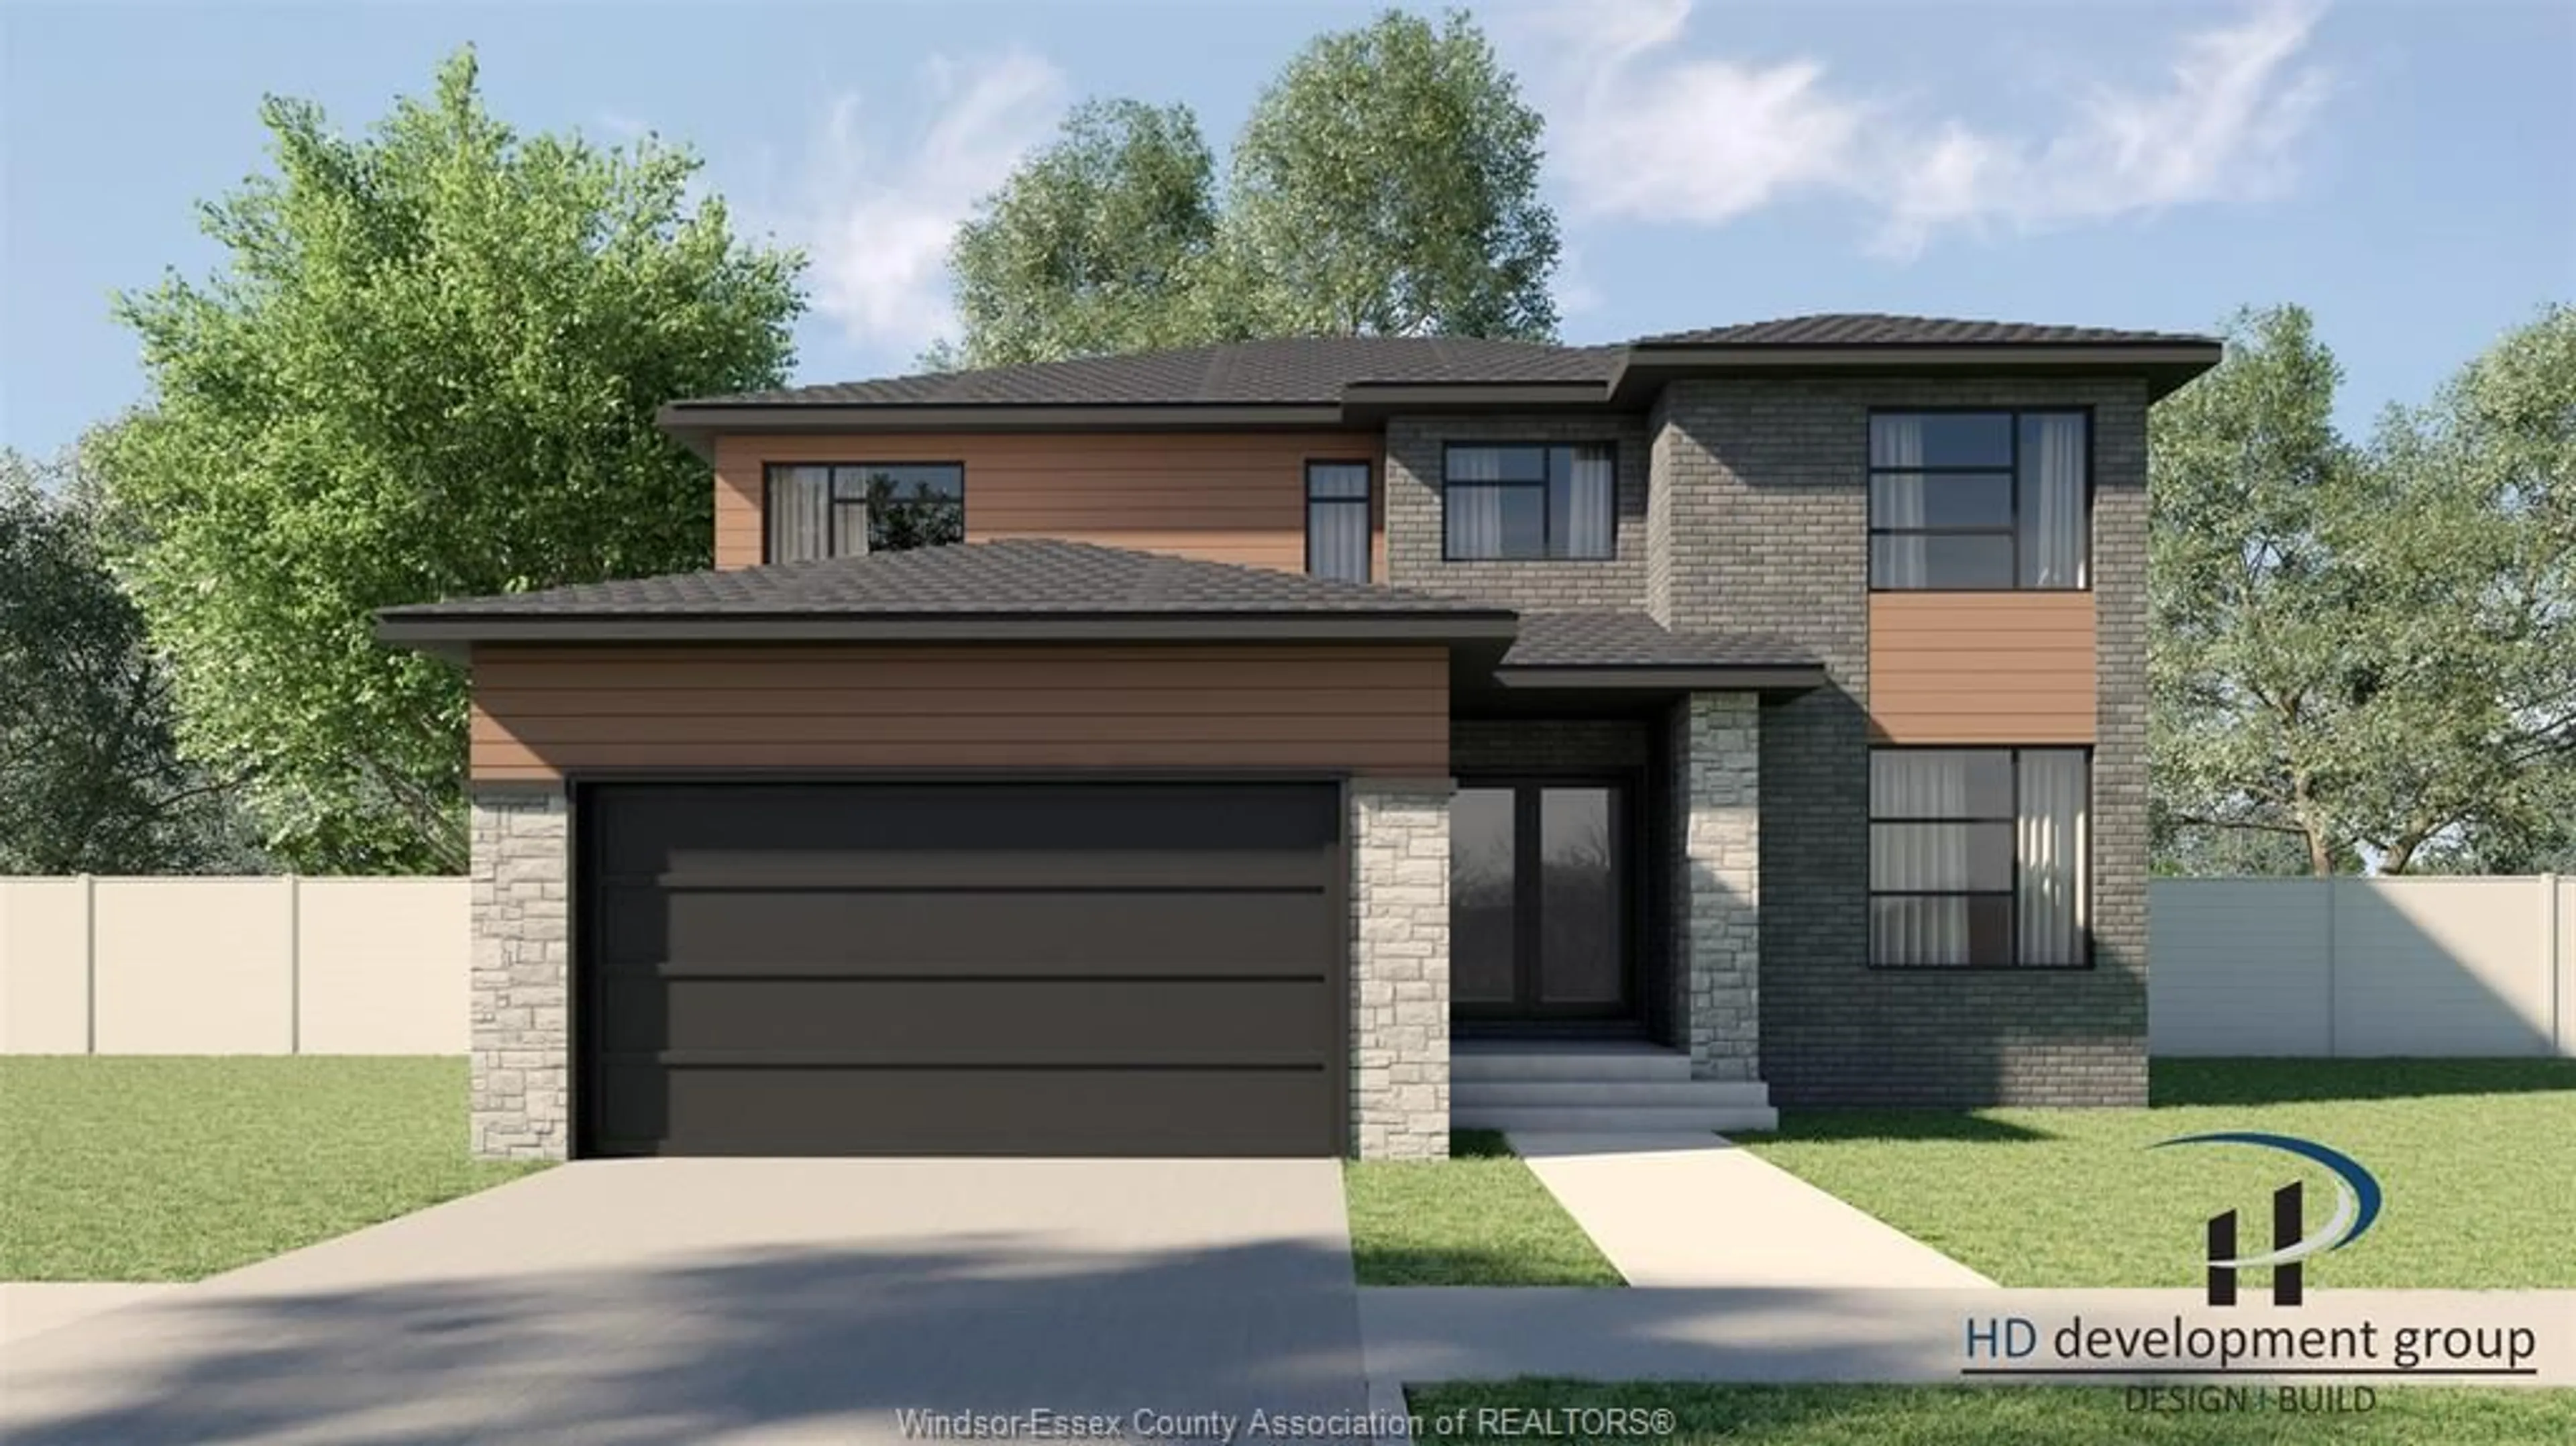 Home with brick exterior material for 2490 PARTINGTON Ave, Windsor Ontario N9E 0A9